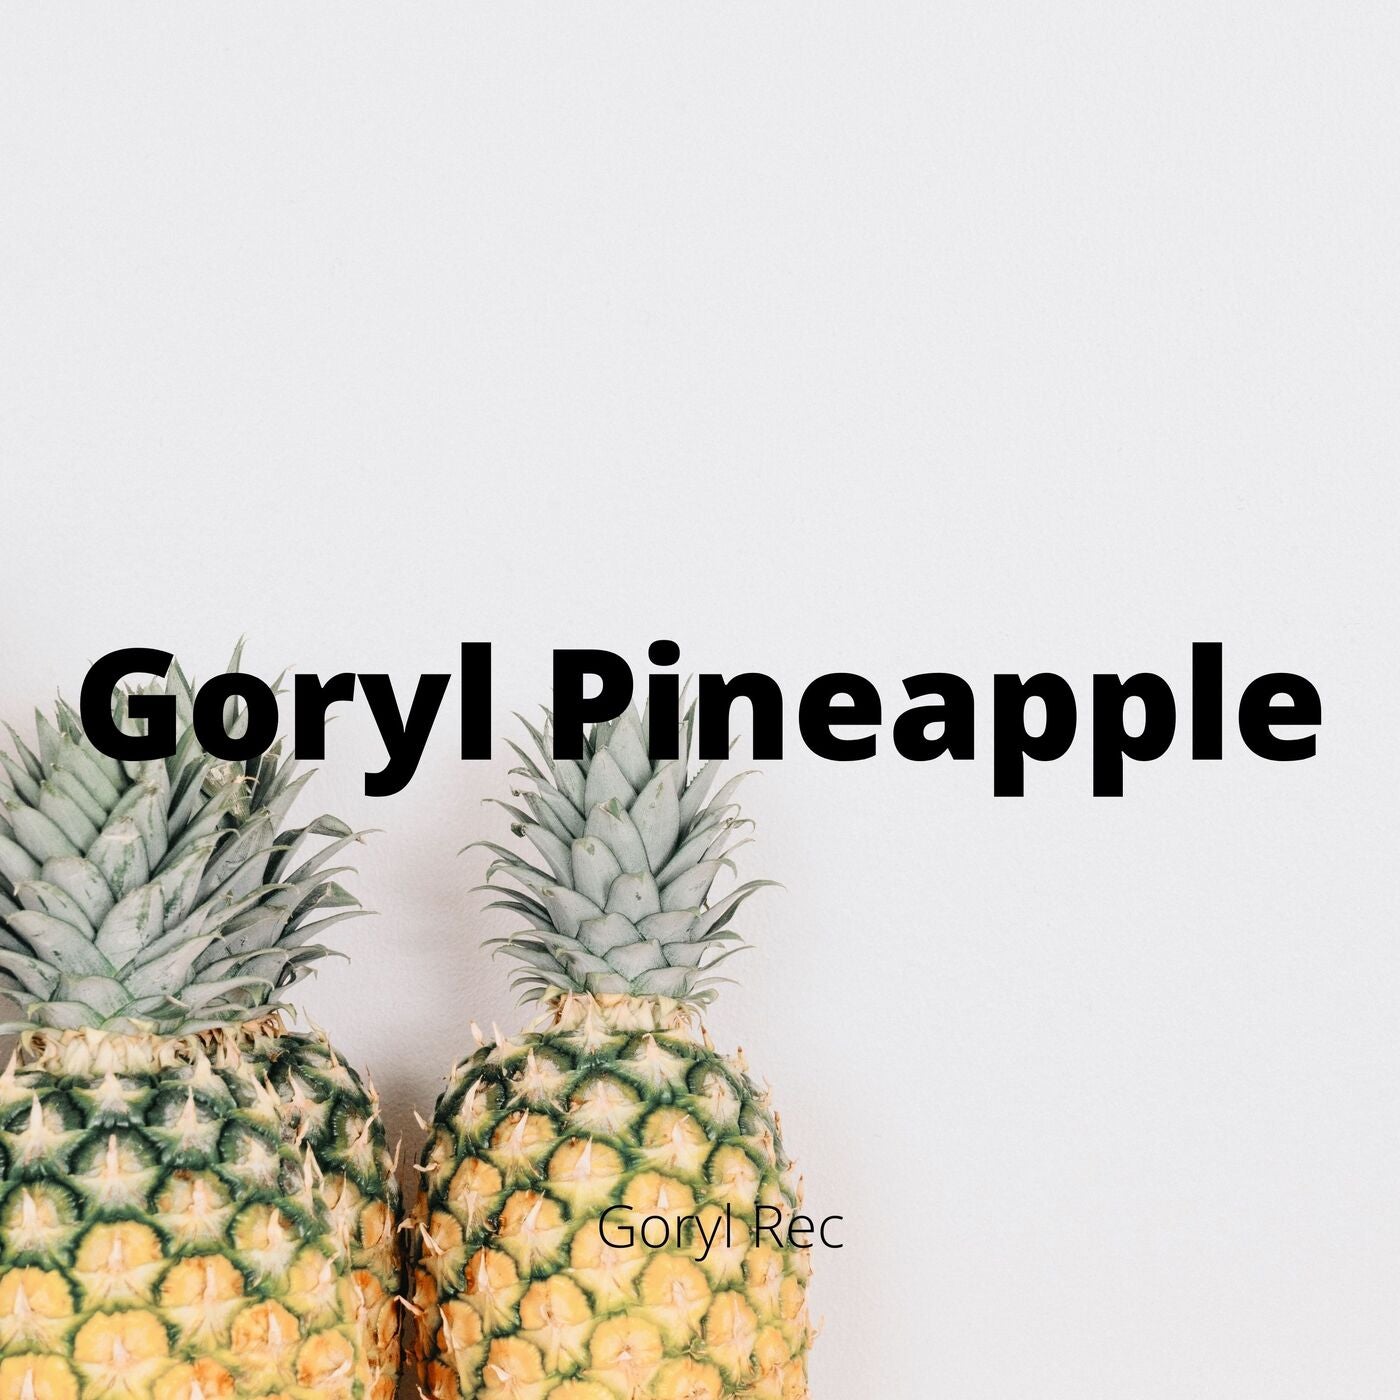 Goryl Pineapple